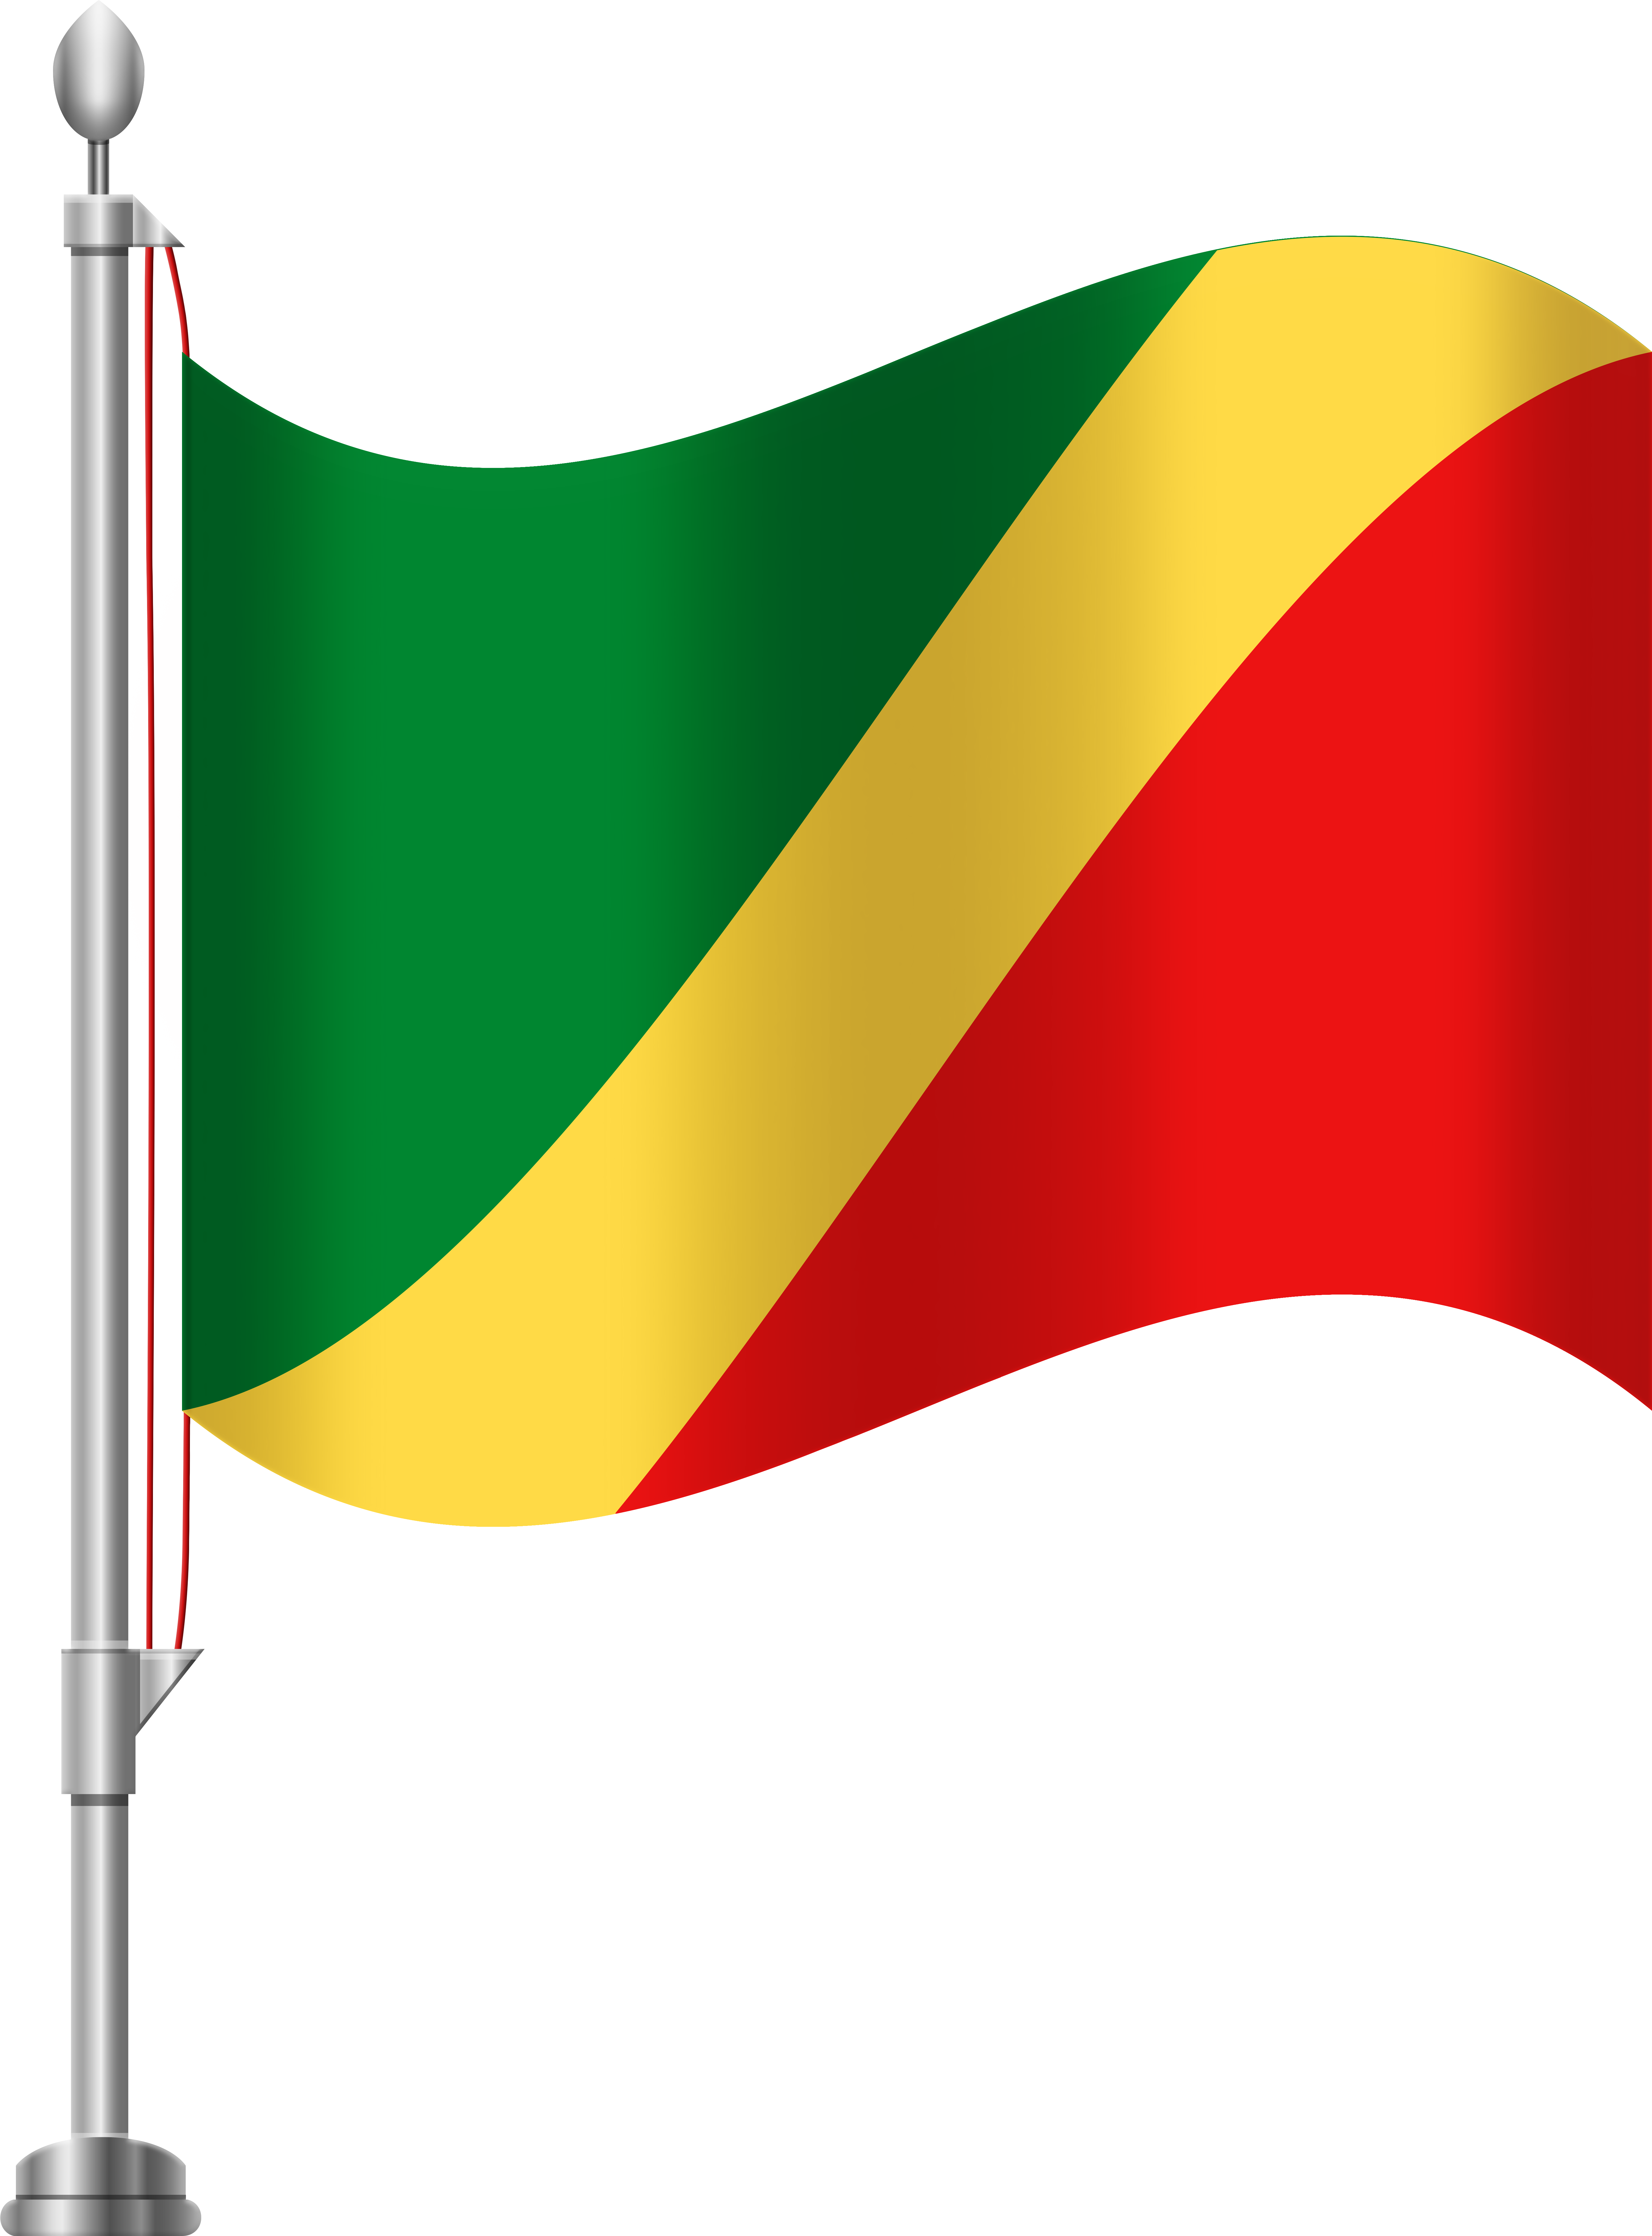 Congo Republic Flagon Pole